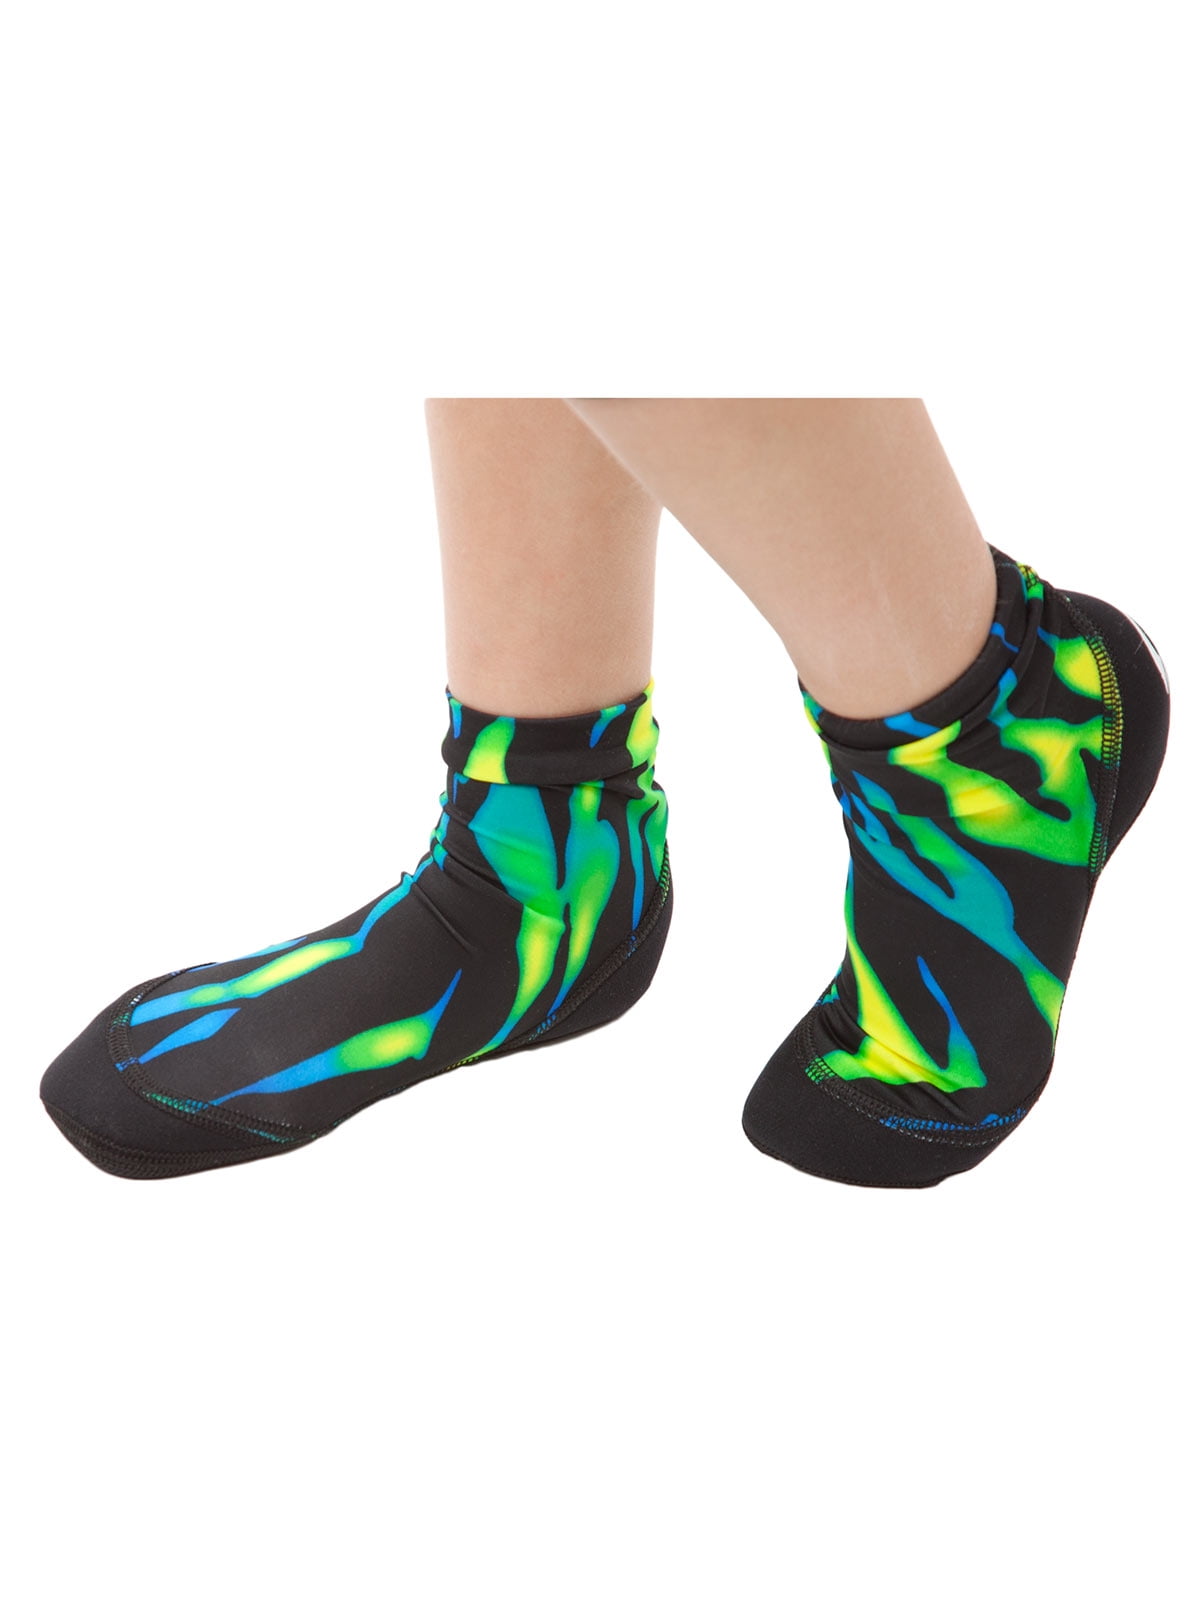 Vincere Sand Socks Soft-Soled Beach Socks (Toddler/Child) Small Neon ...